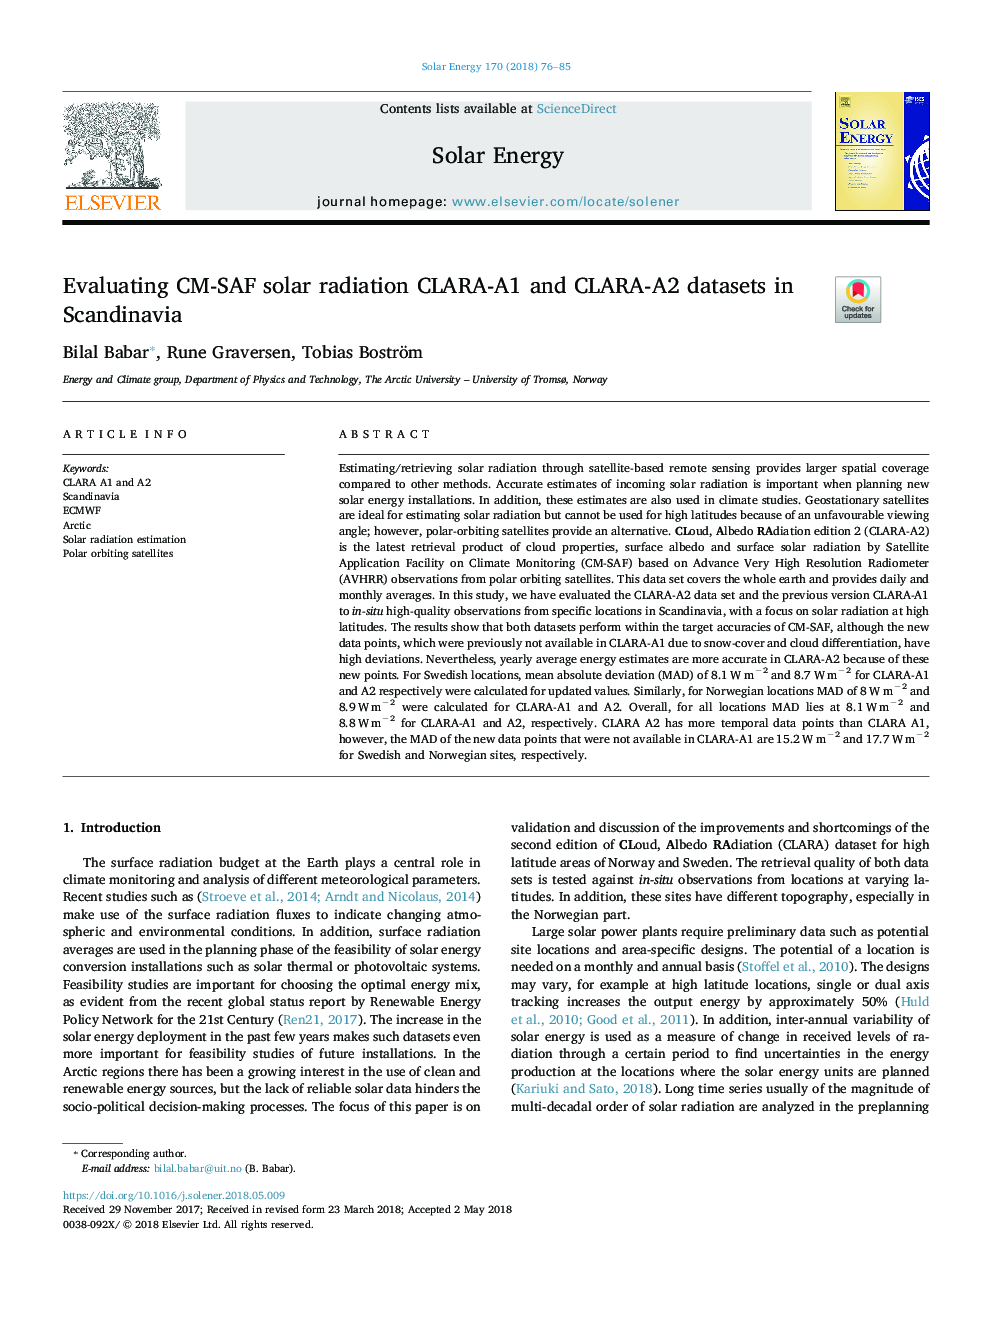 Evaluating CM-SAF solar radiation CLARA-A1 and CLARA-A2 datasets in Scandinavia